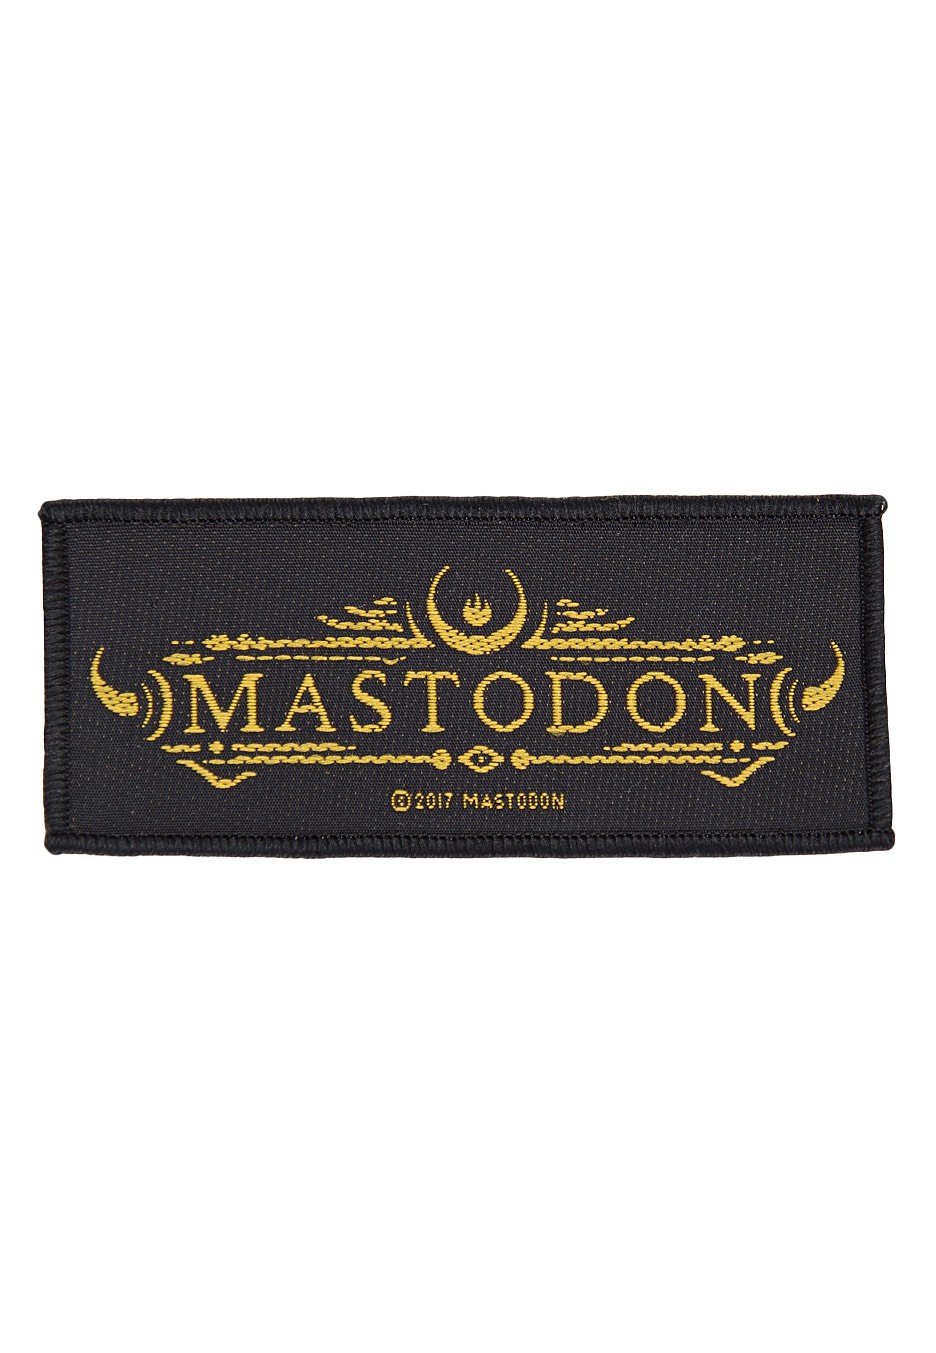 Mastodon - Logo - Patch